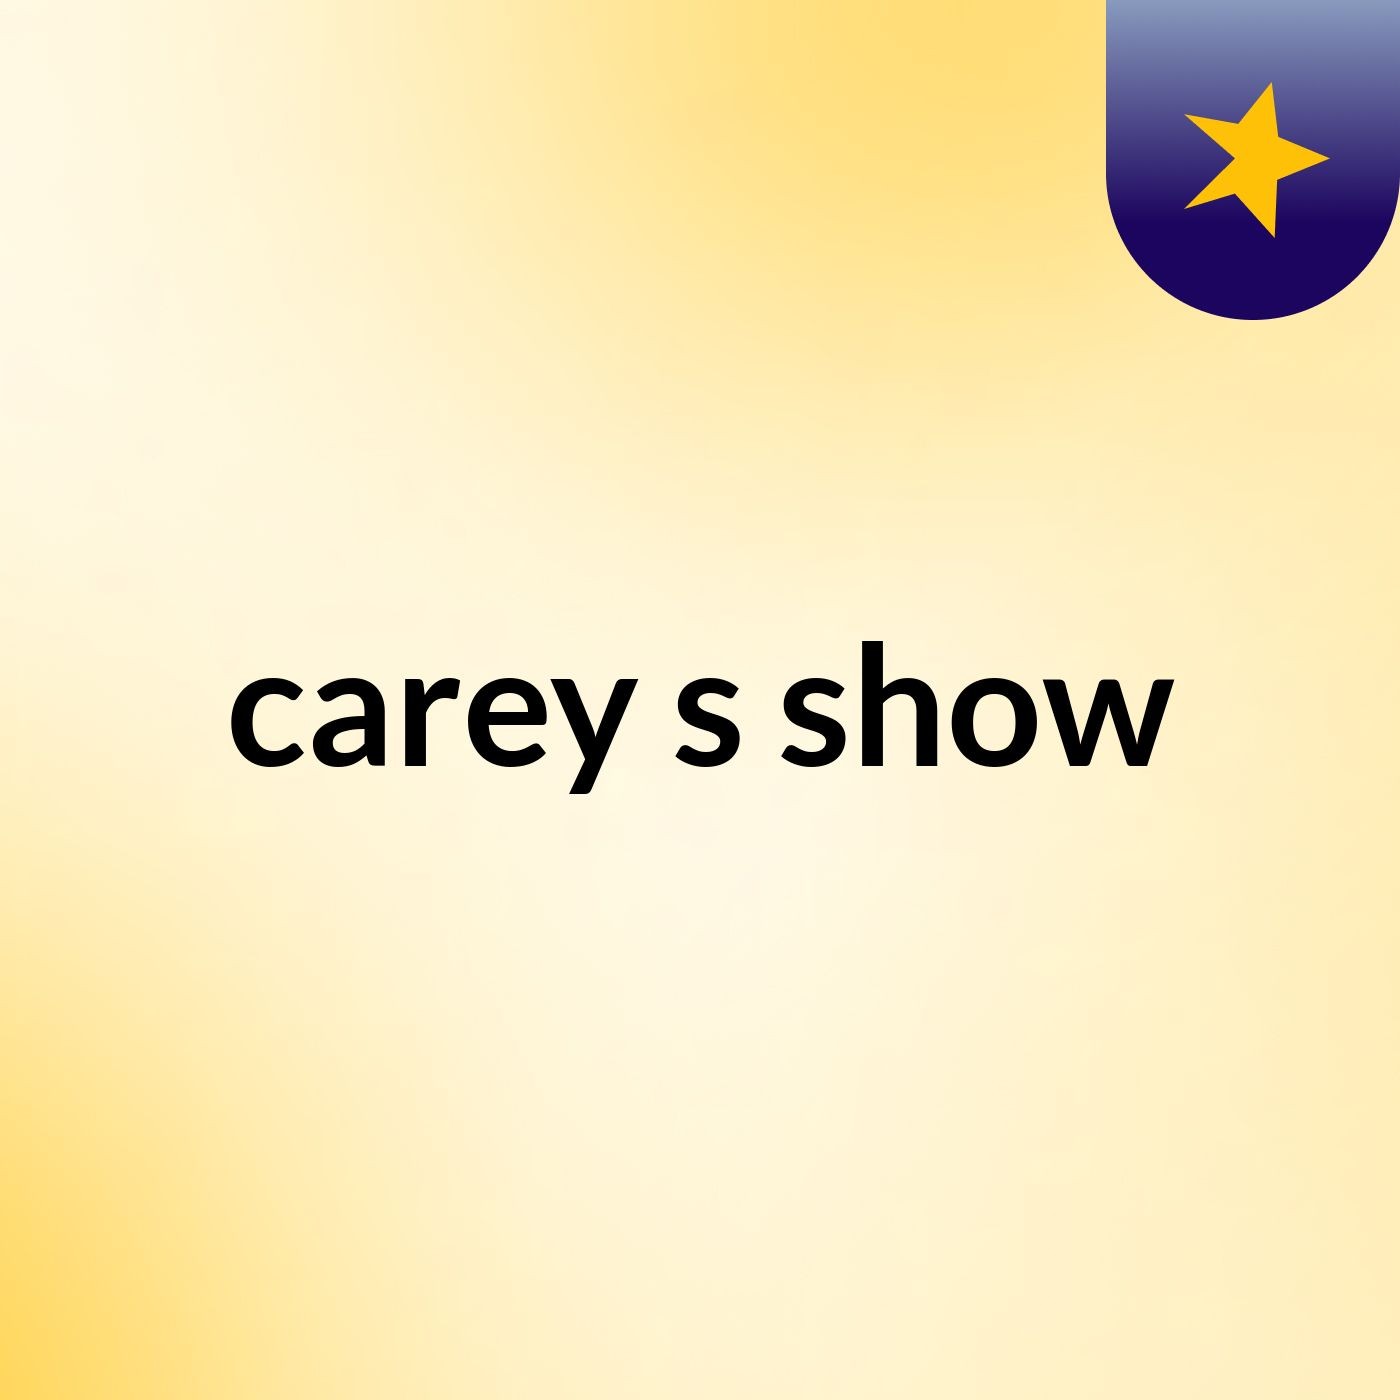 carey's show